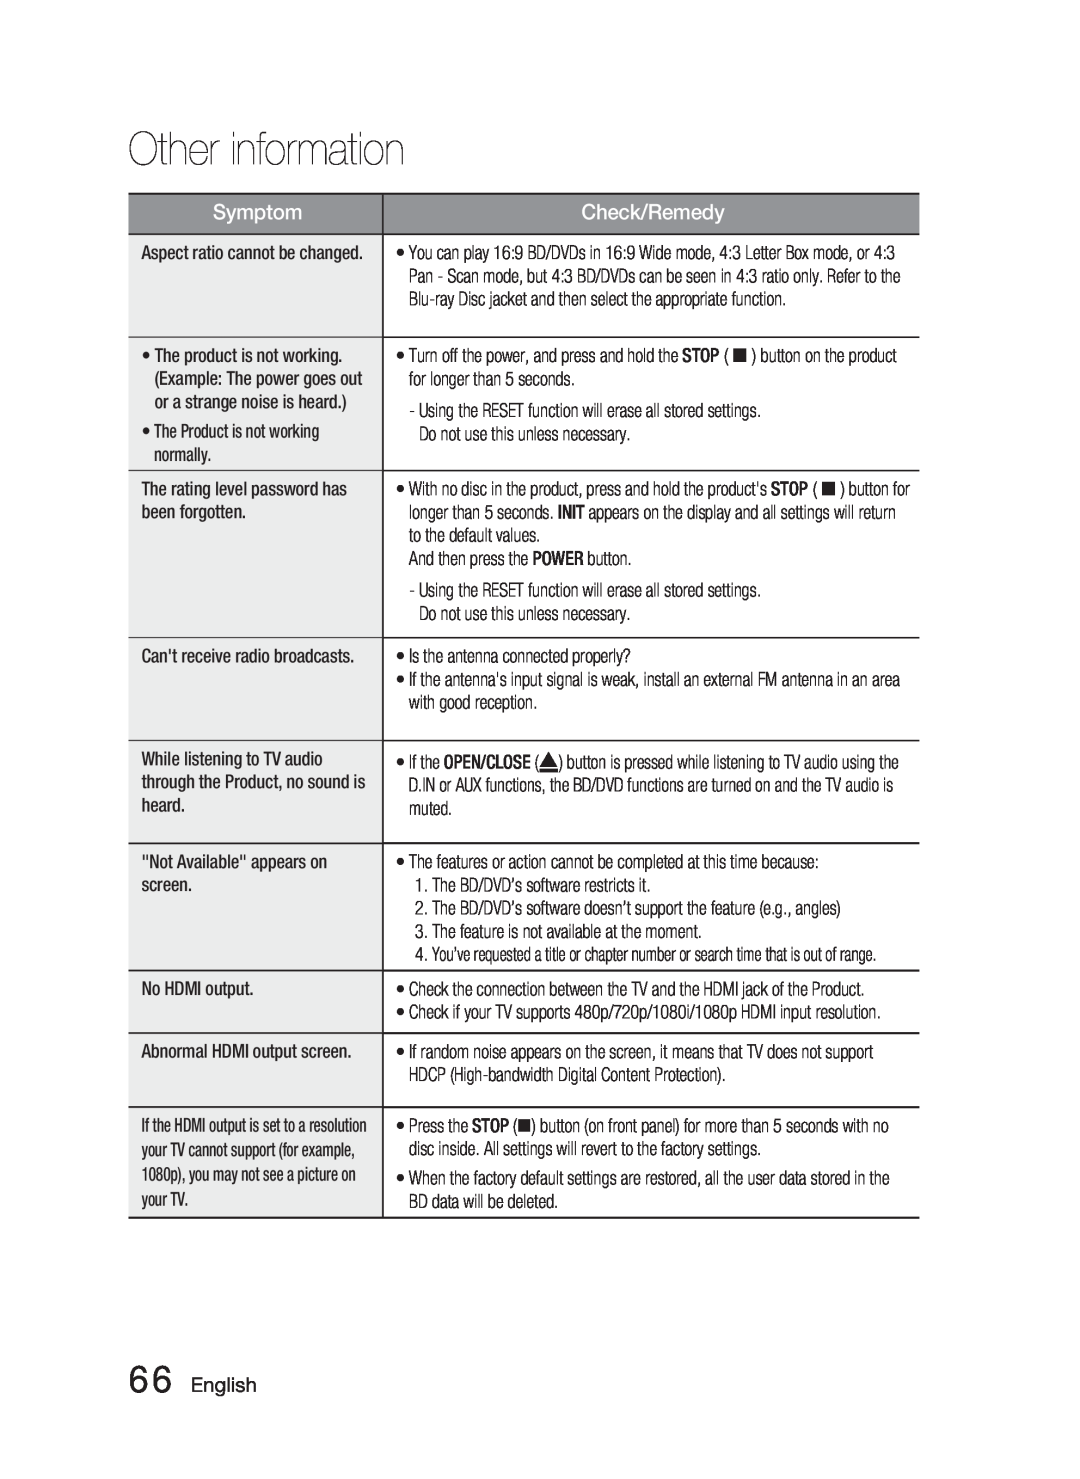 Samsung HT-C6900W user manual English, Other information, Symptom, Check/Remedy 